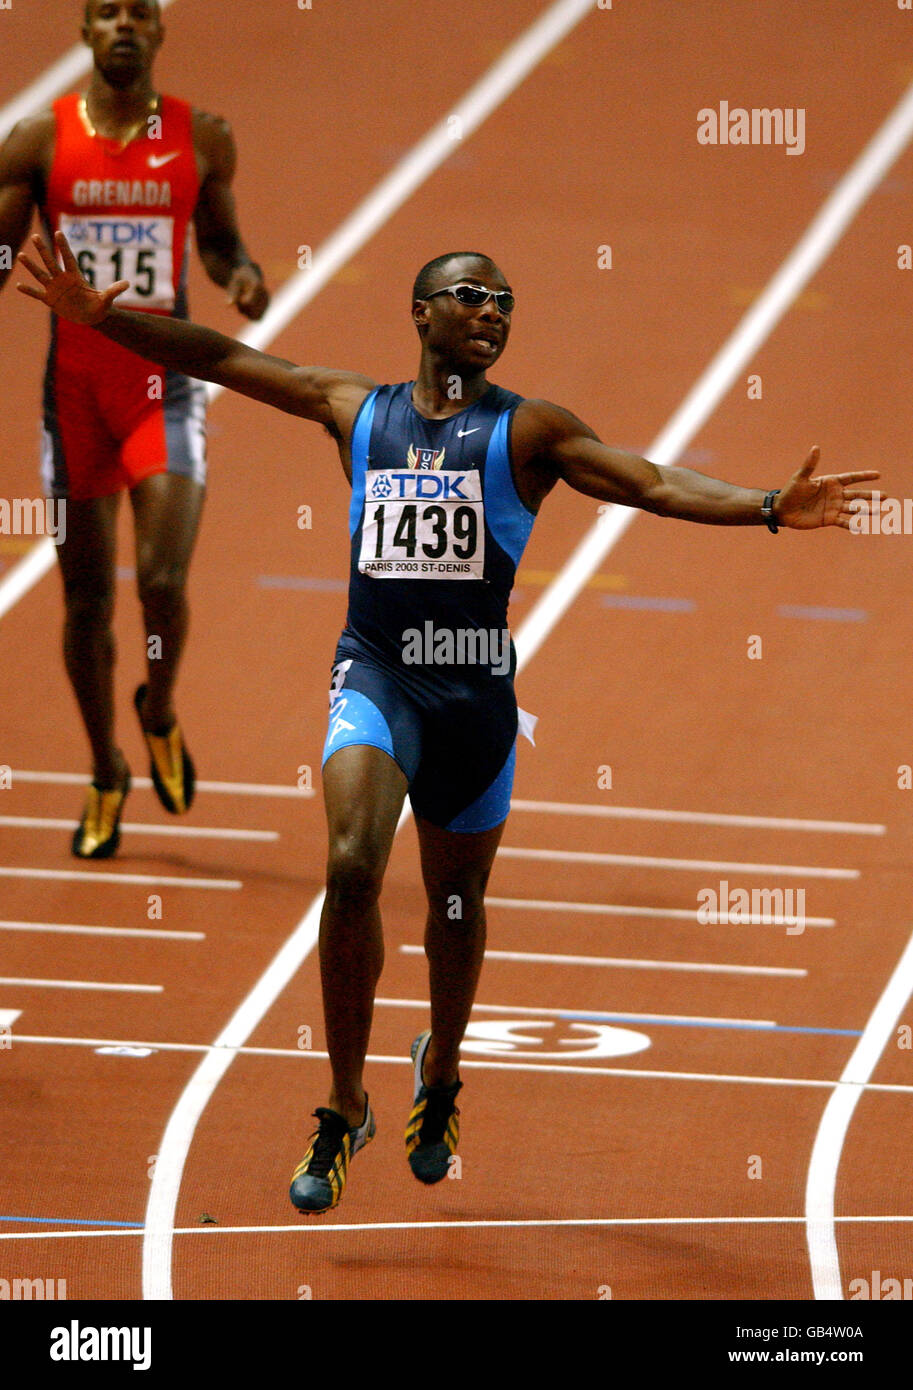 Athletics iaaf world athletics championships paris 2003 mens 400m final